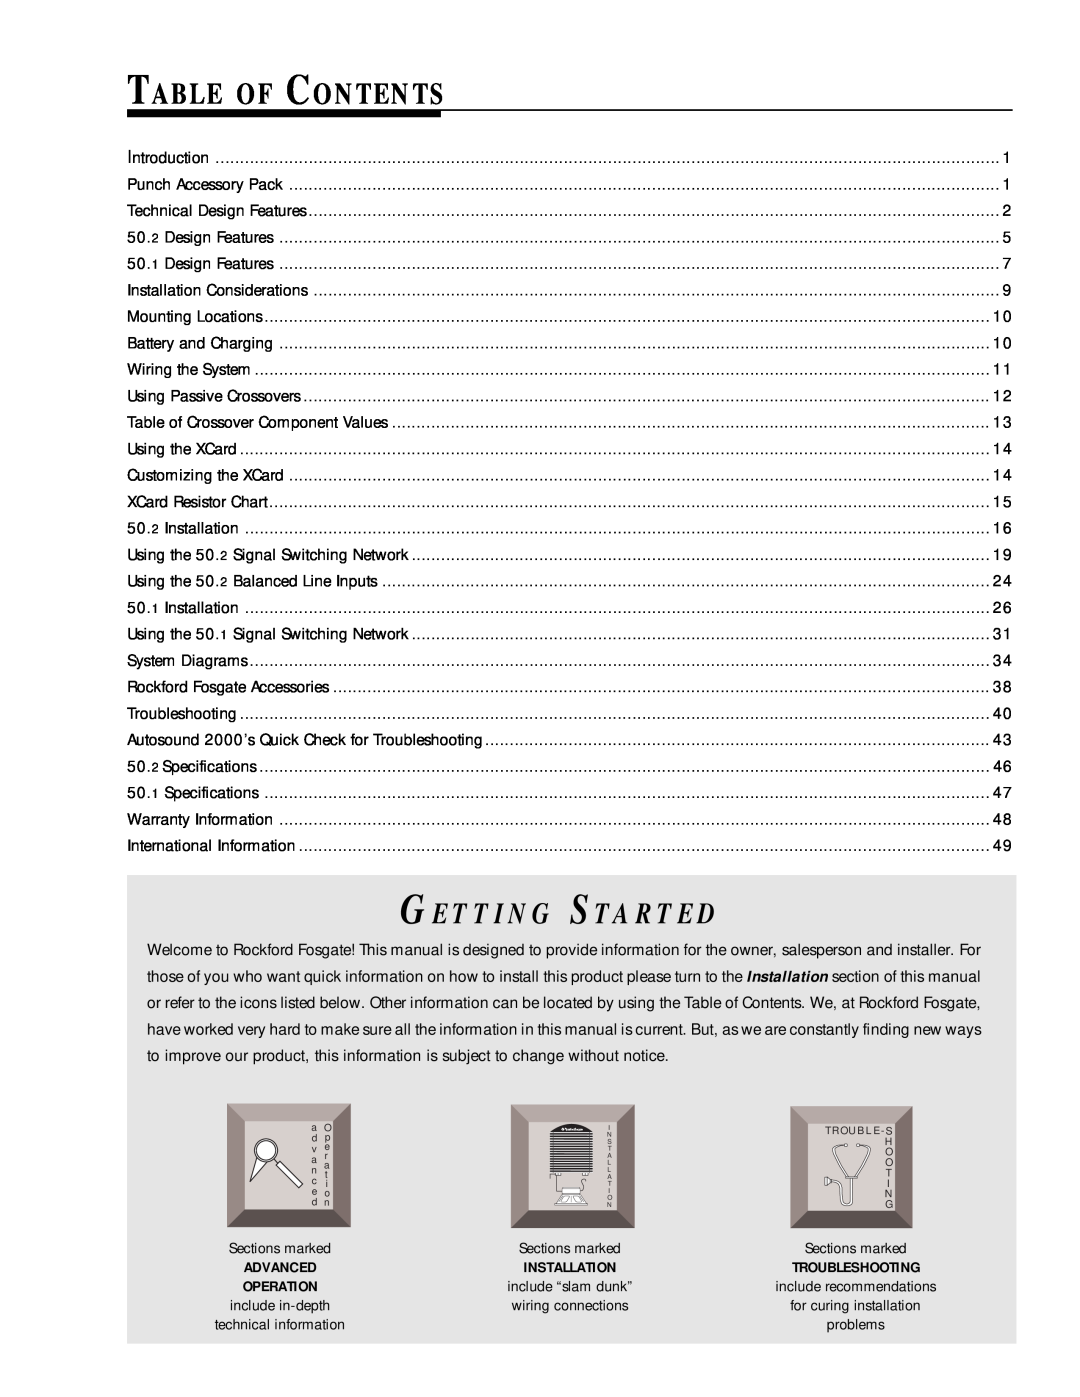 Rockford Fosgate 50.1, 50.2 manual Table Of Contents, G E T T I N G S Ta R T E D 